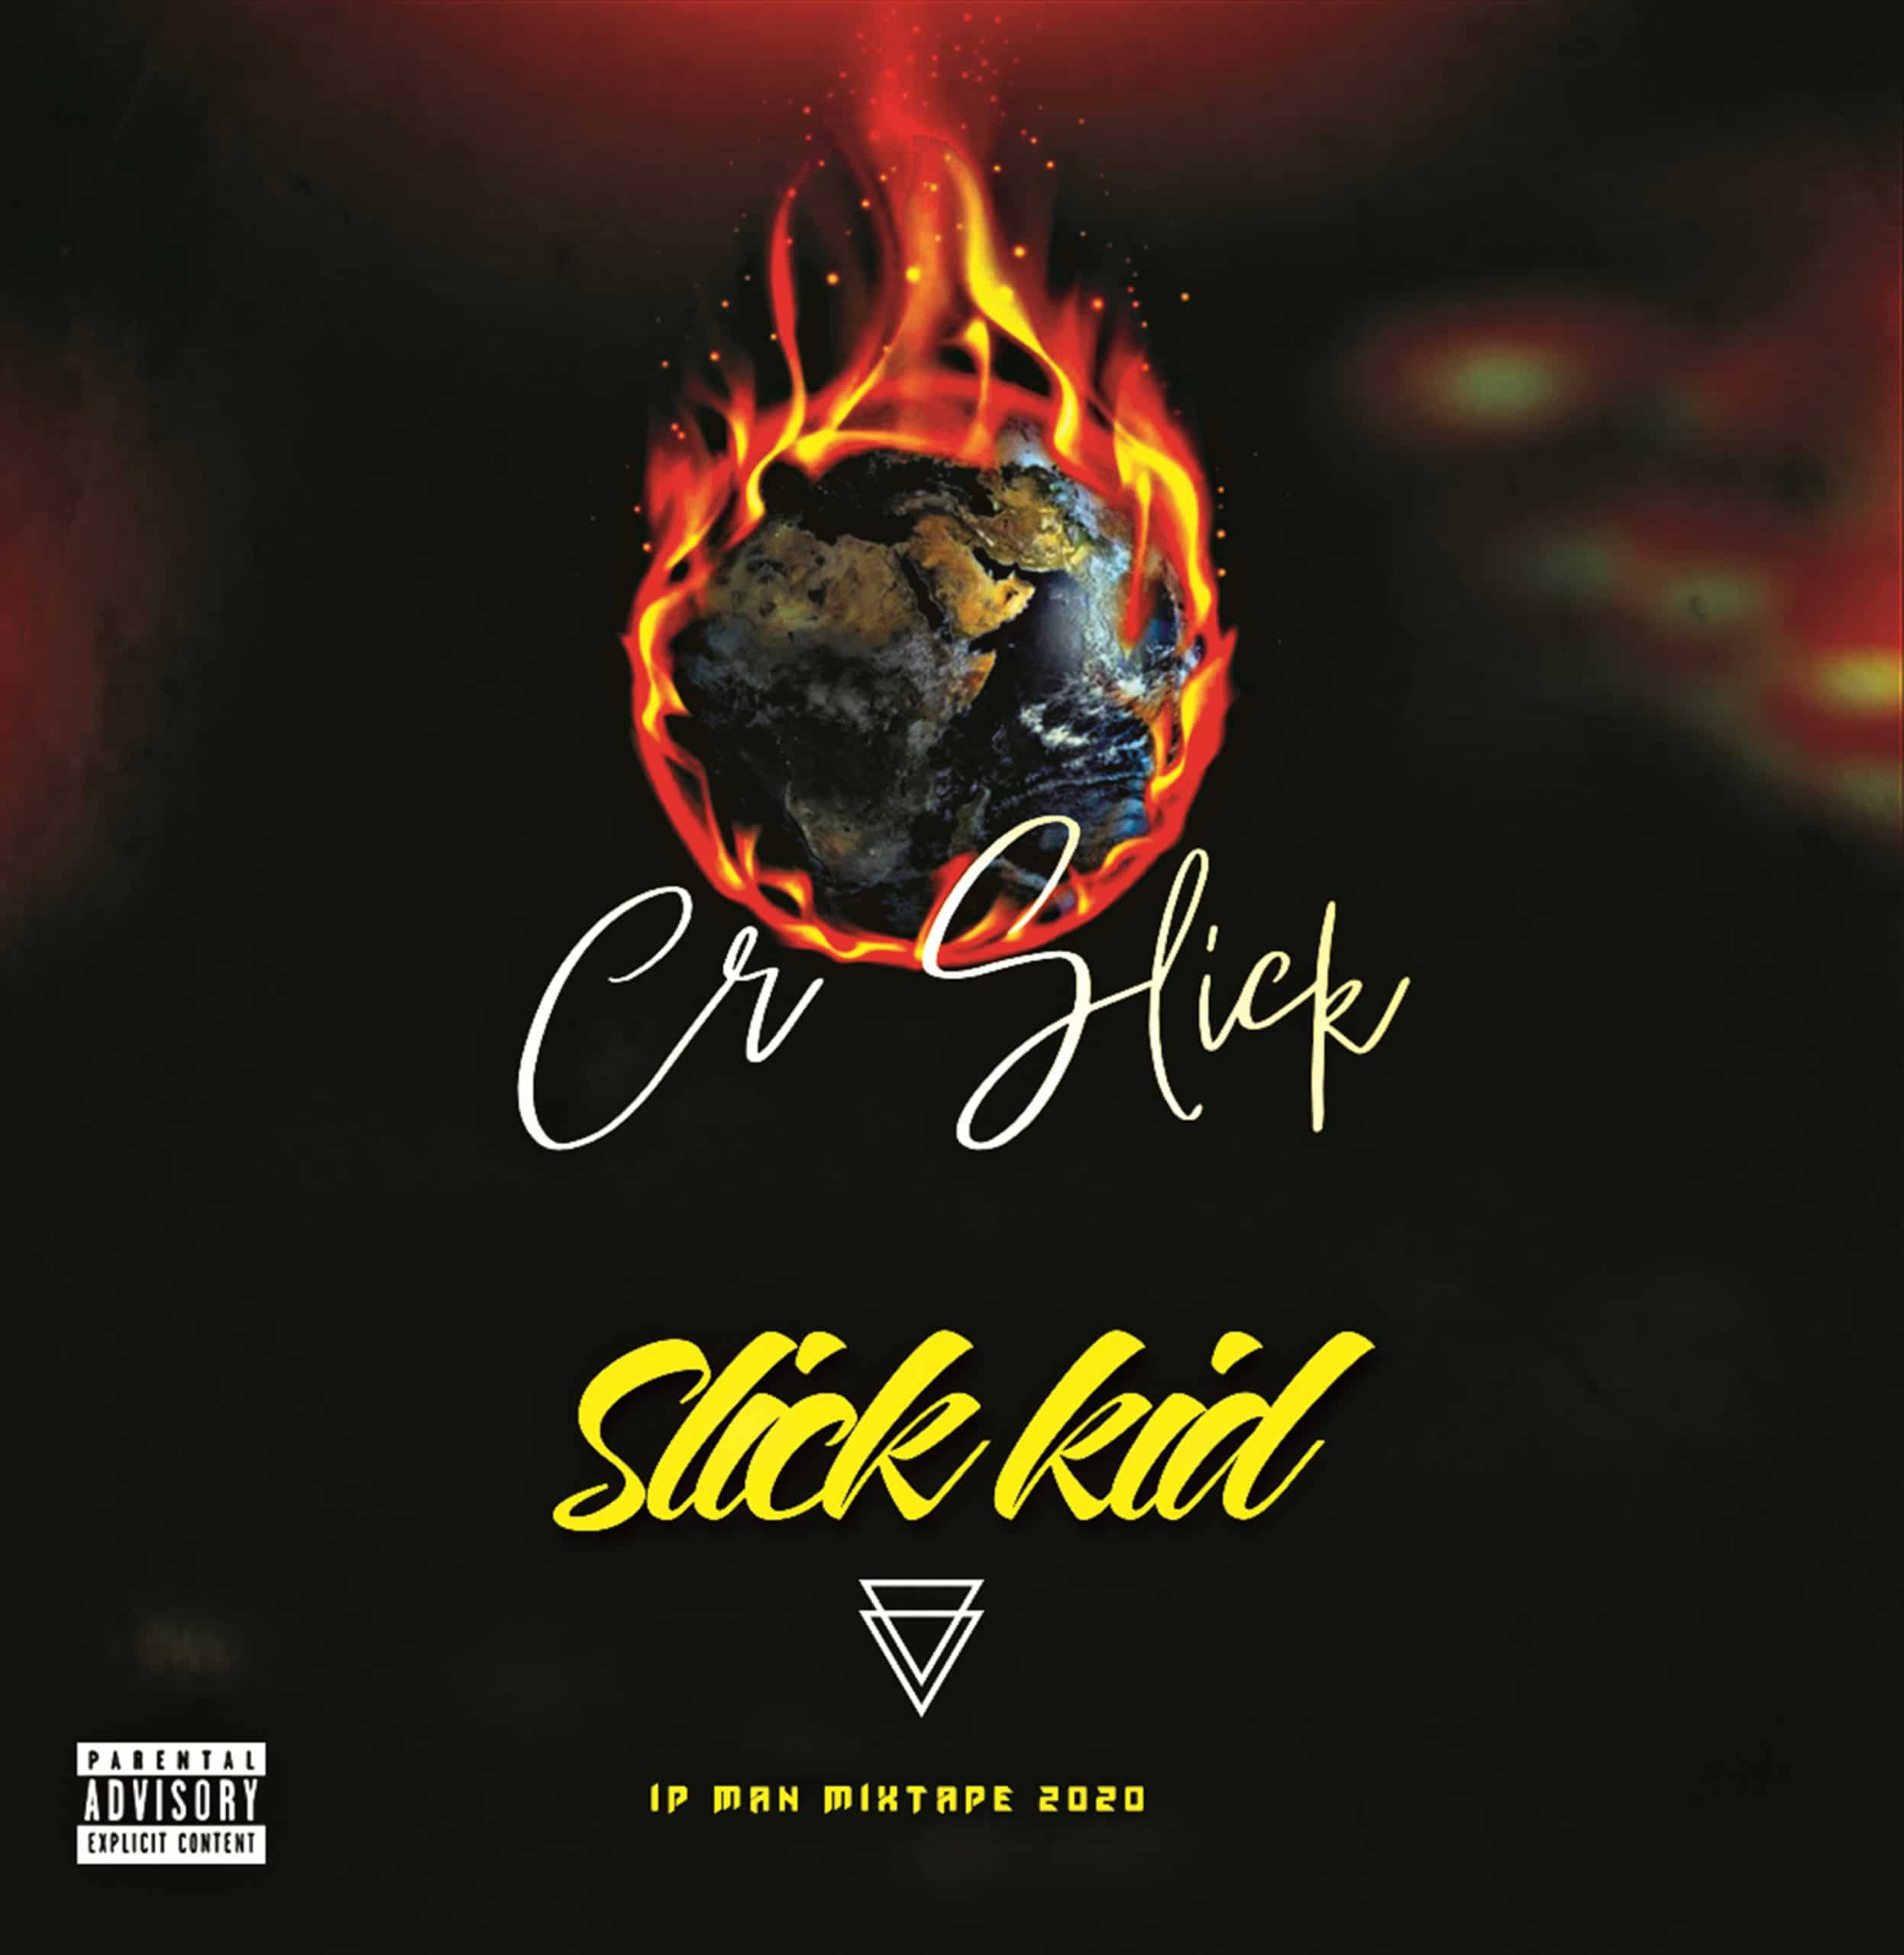 Slick Kid - CR Slick